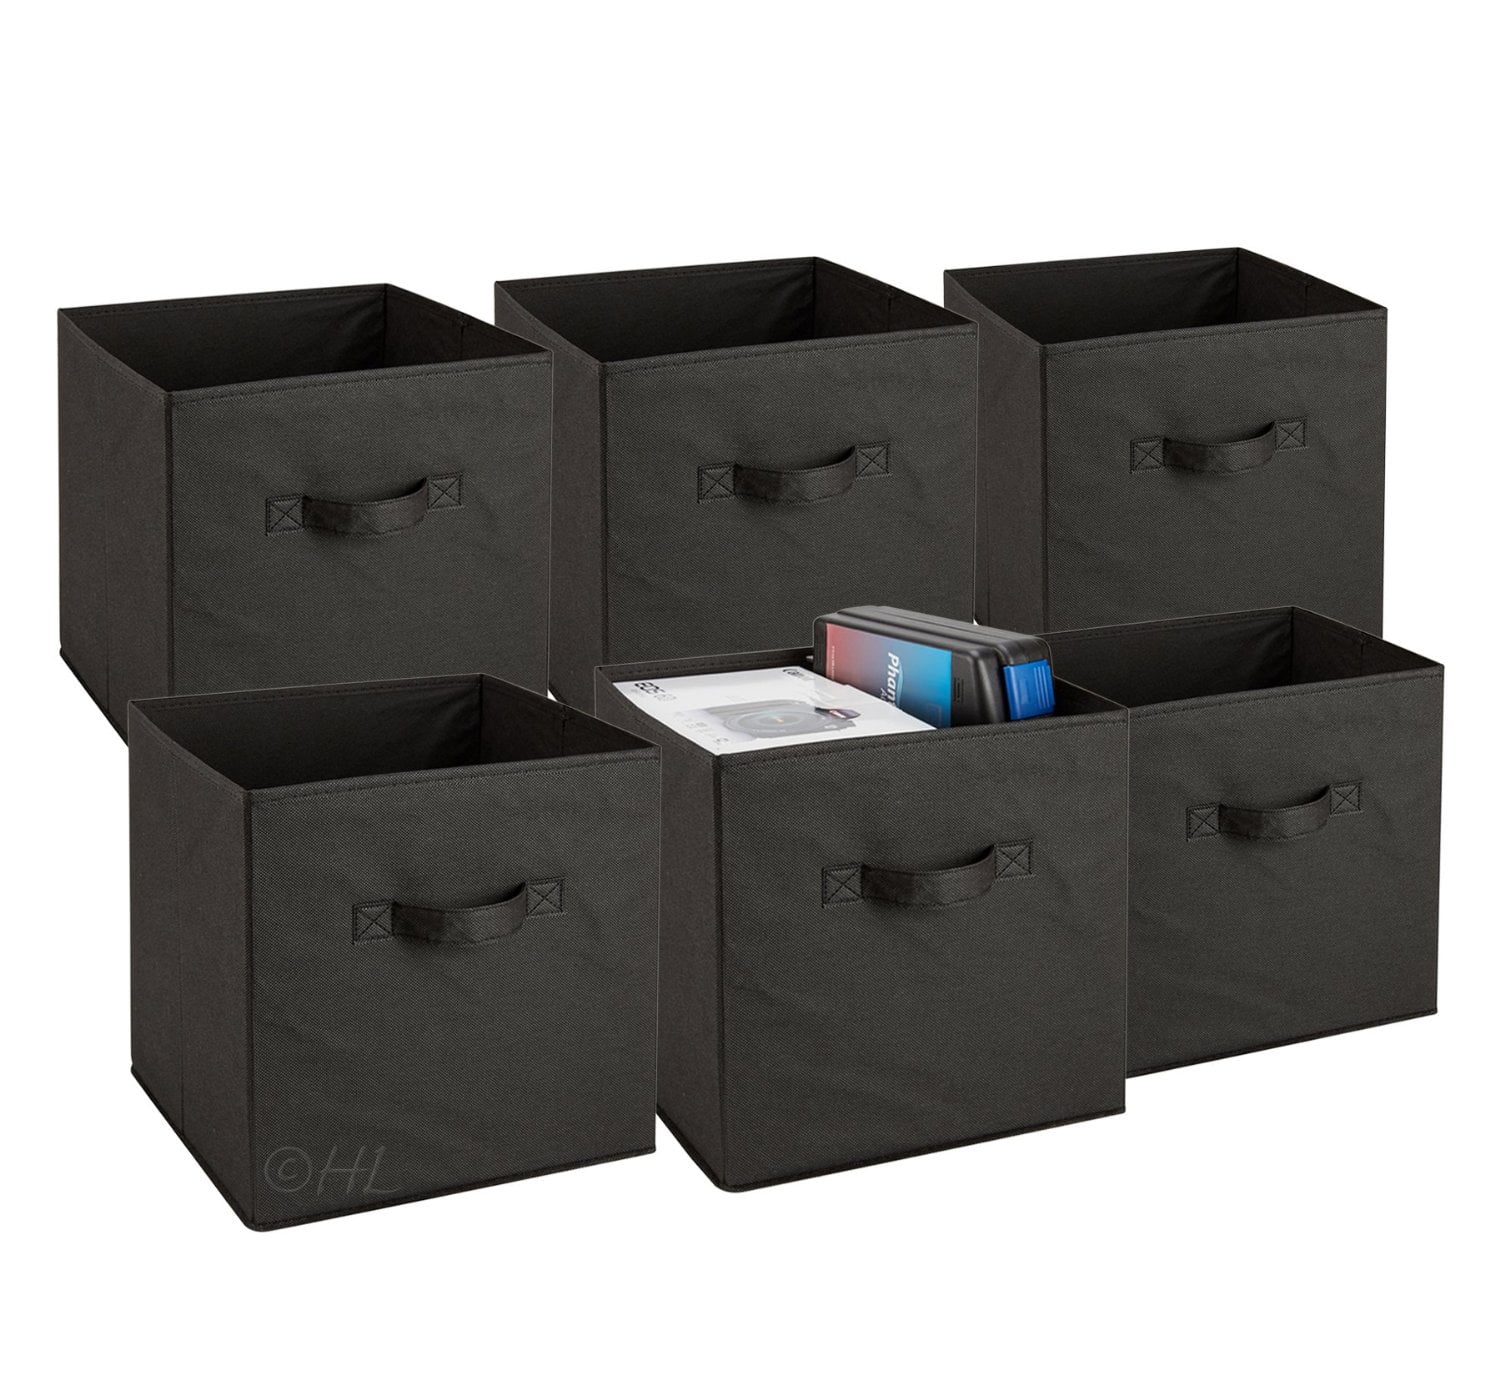 Foldable Storage Cube Bins - Black - Pack of 6 - Walmart.com